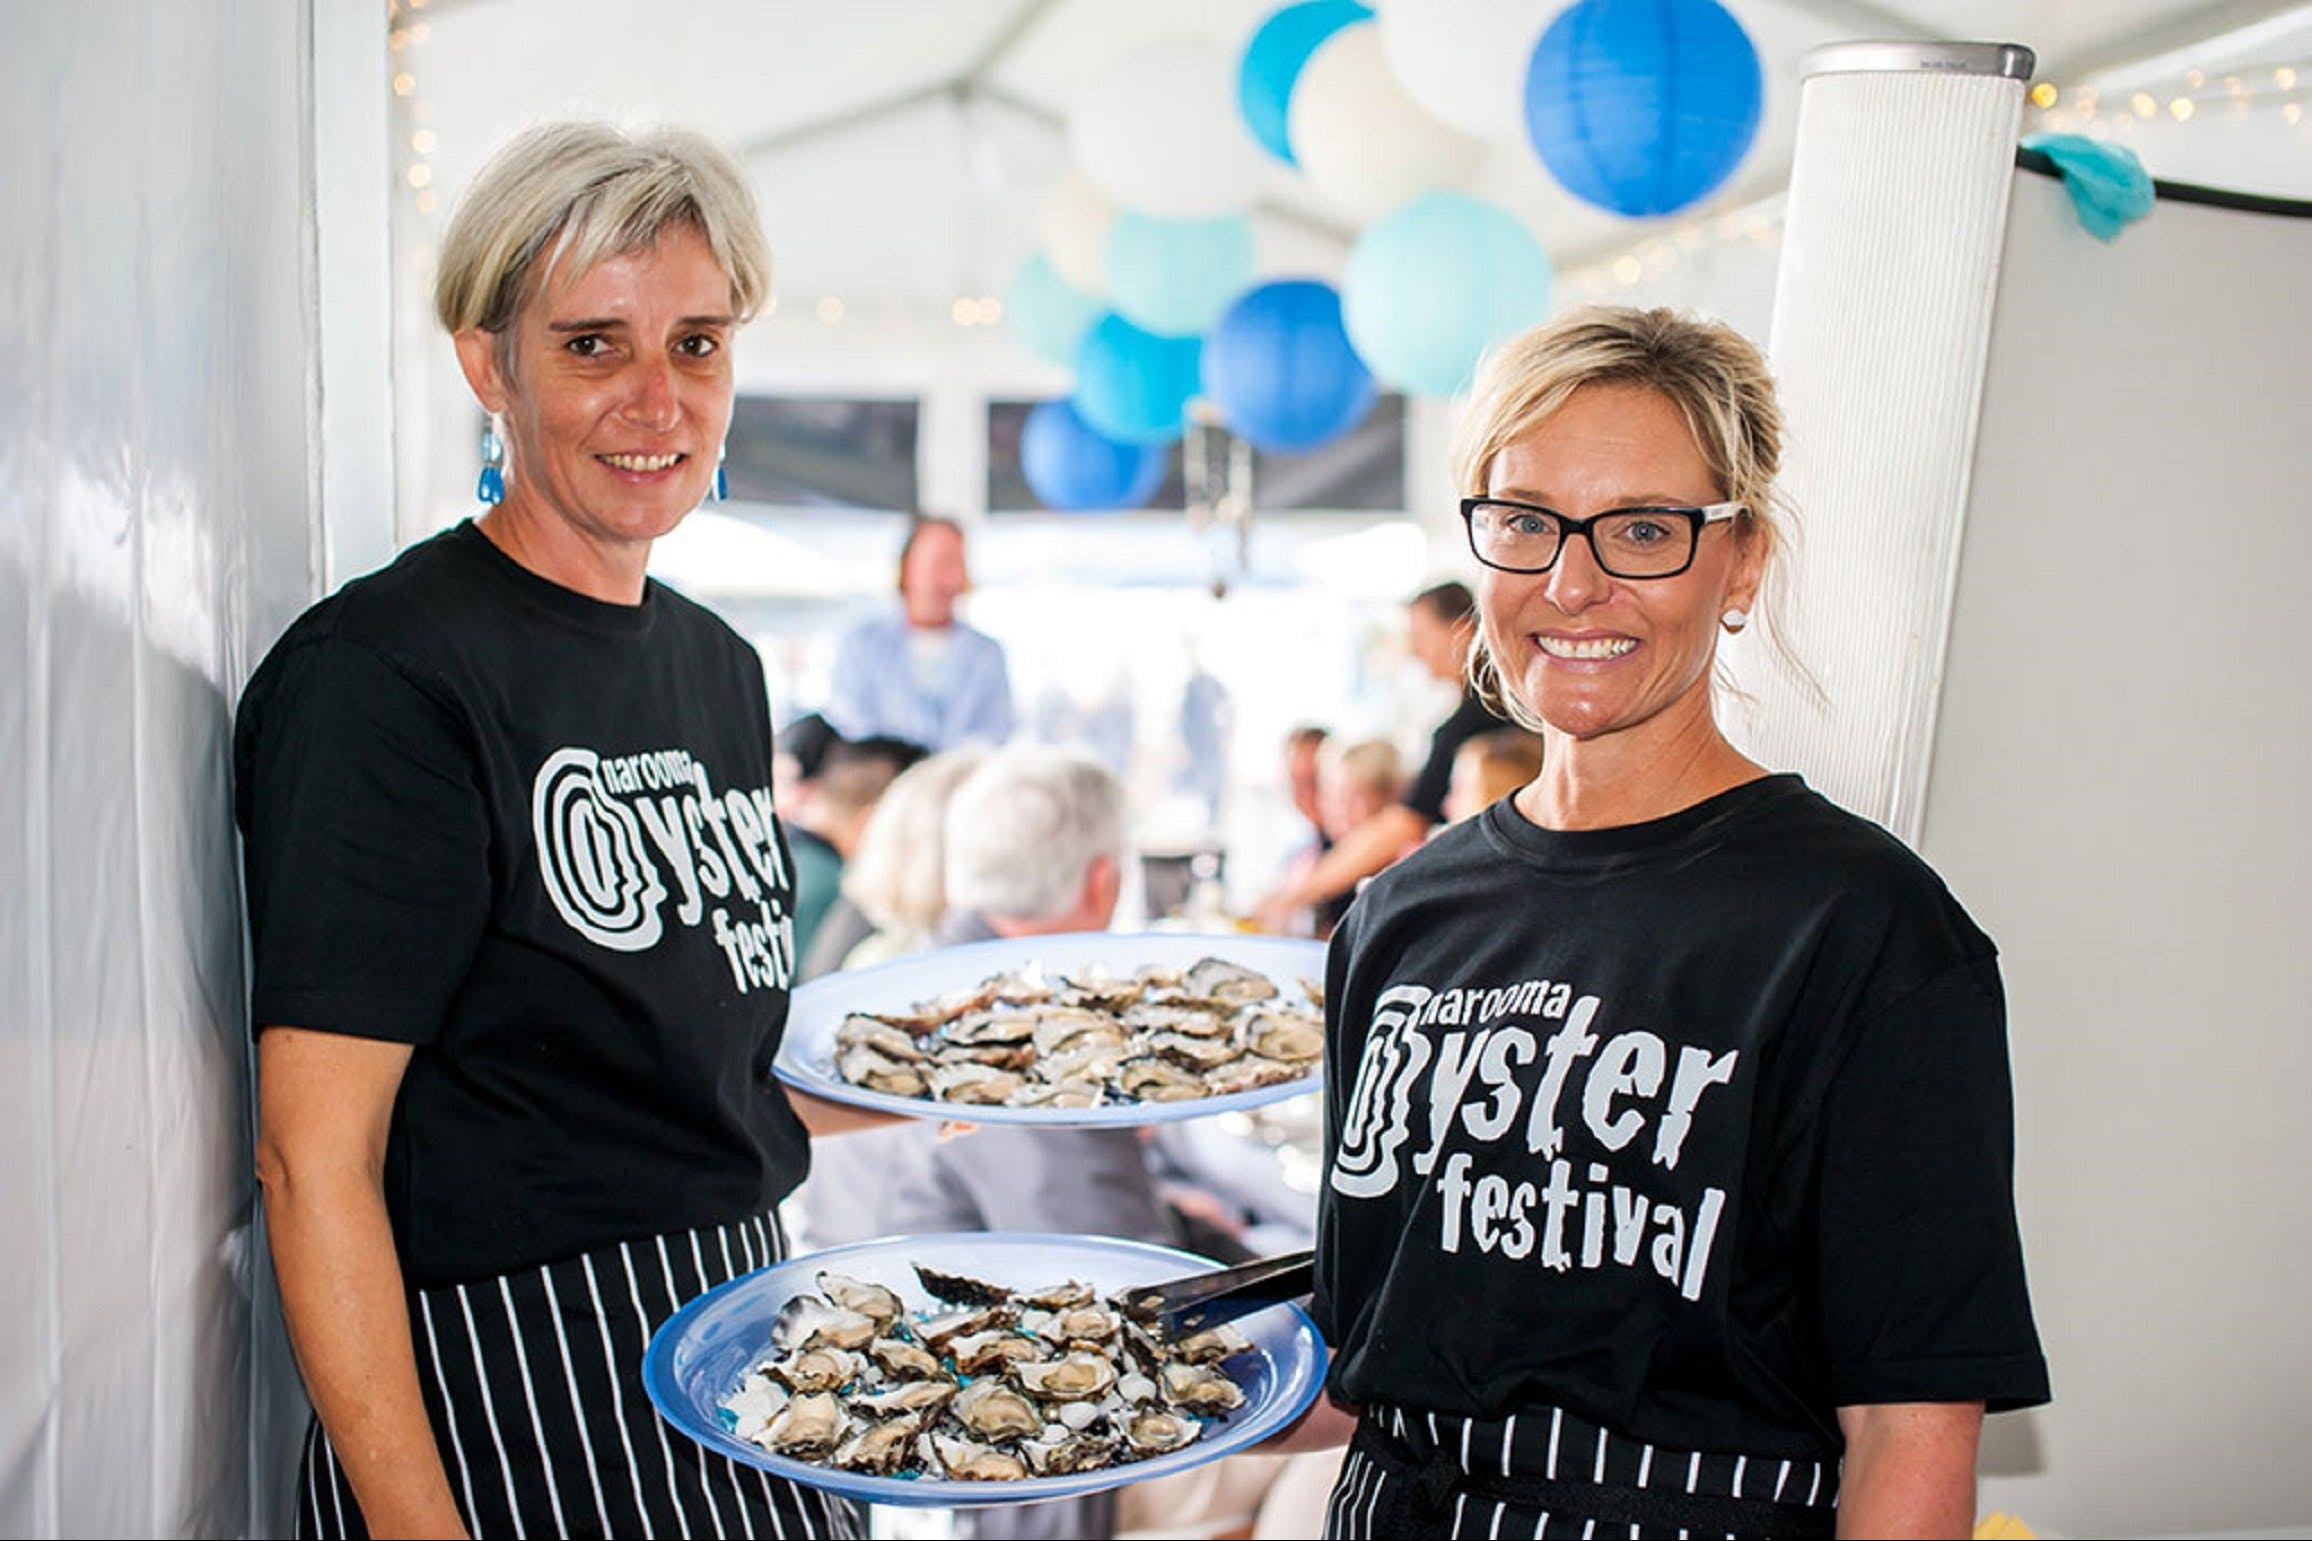 Narooma Oyster Festival